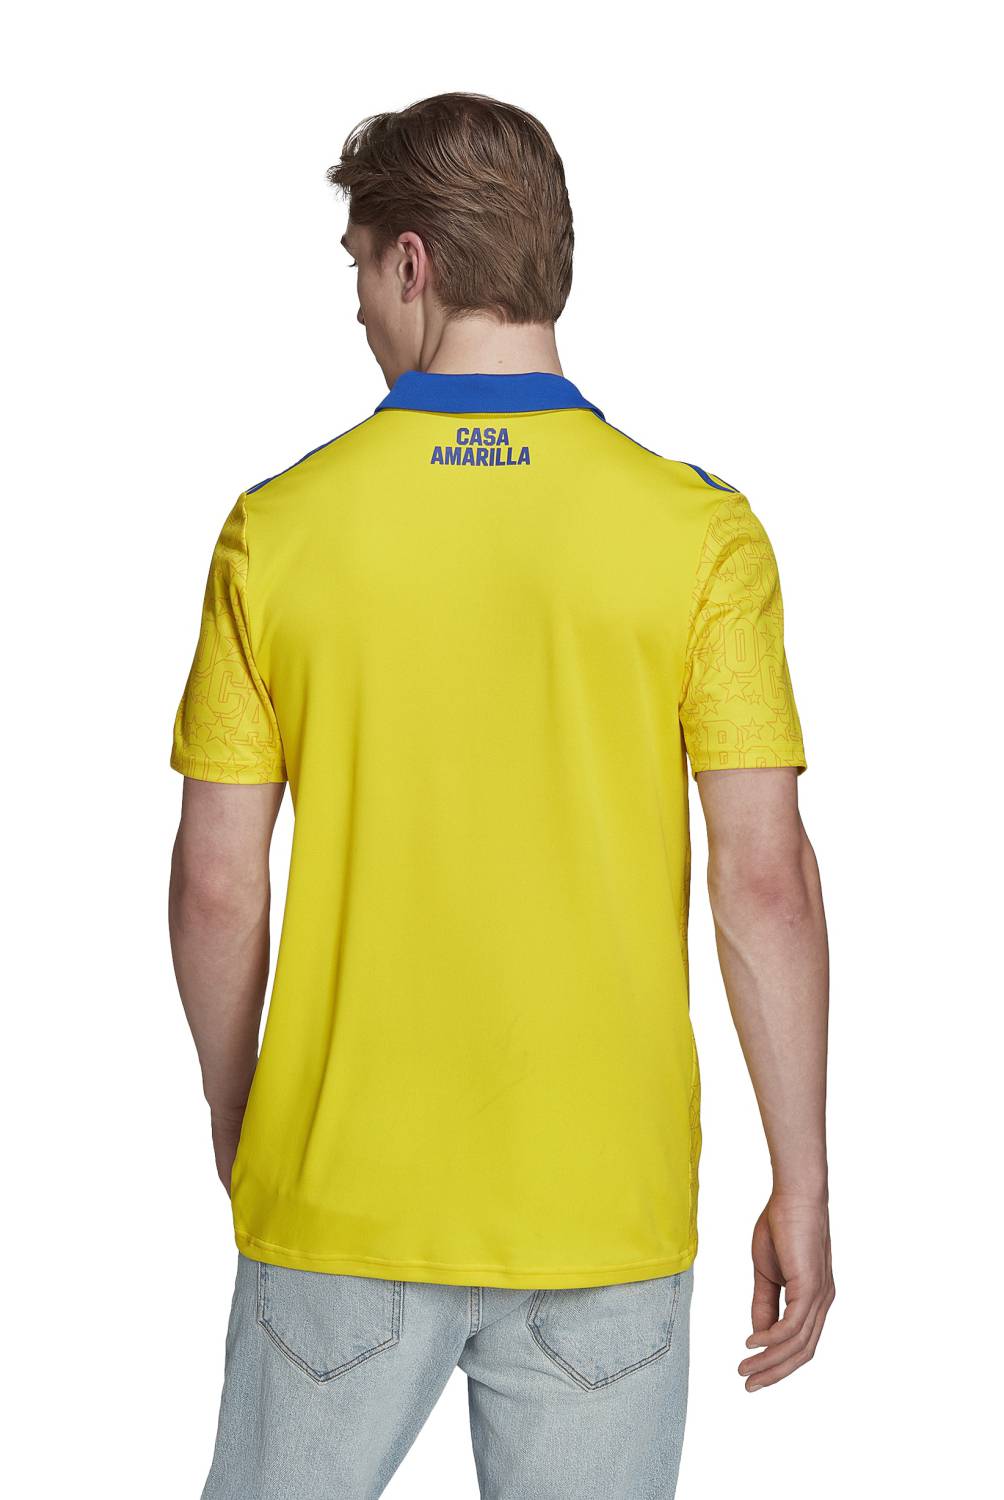 ADIDAS - Adidas Camiseta de Fútbol Boca Juniors Tercera Hombre